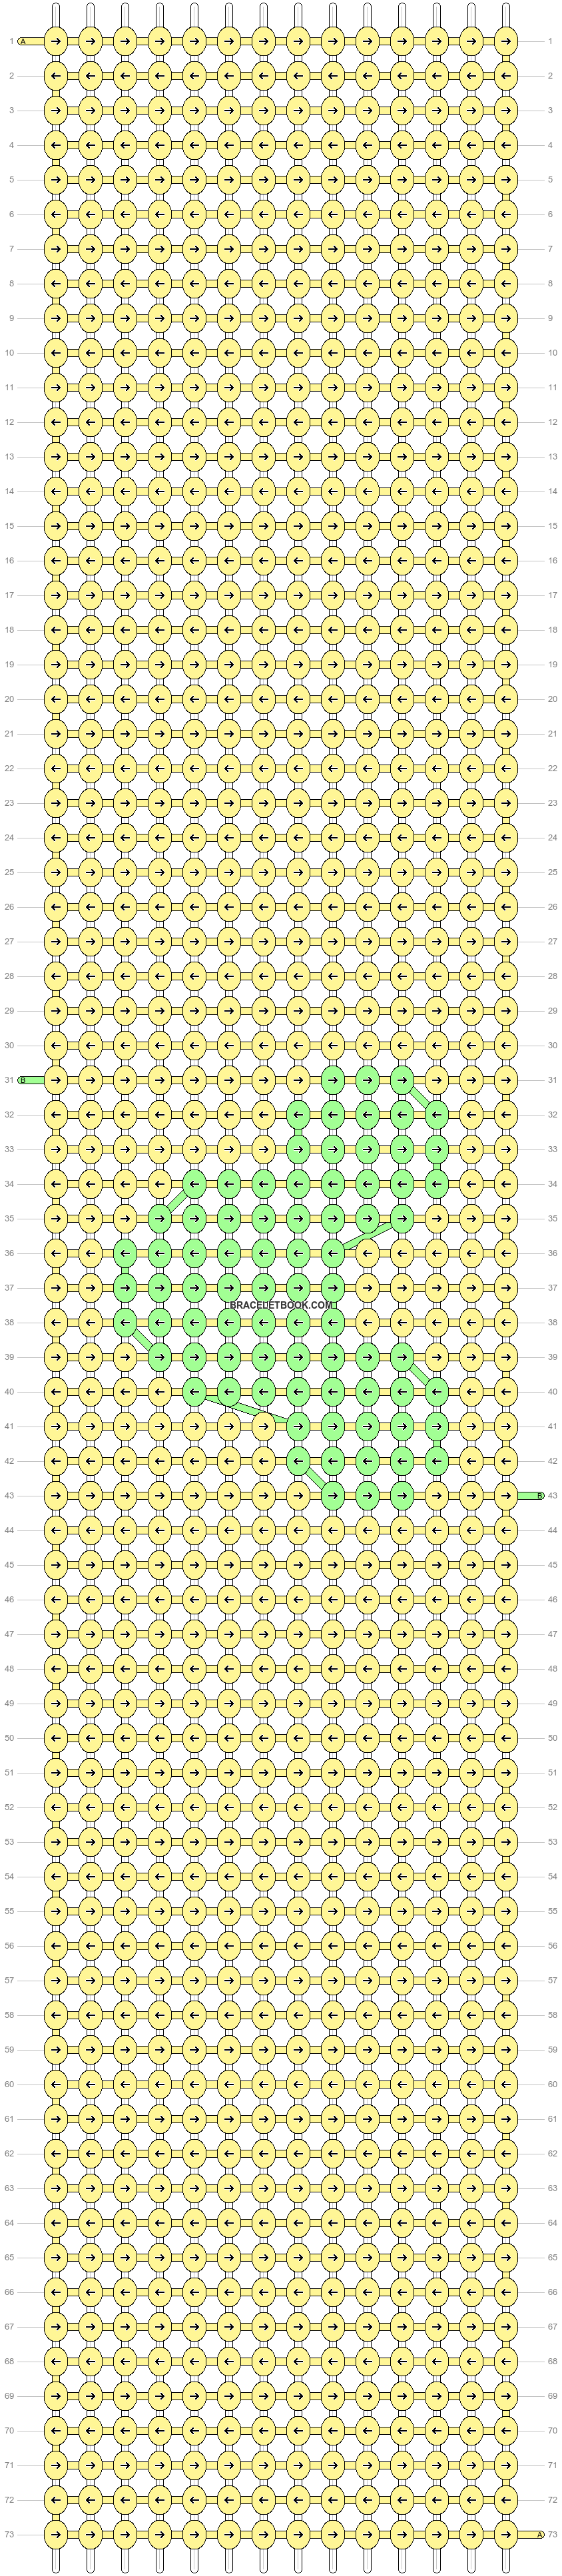 Alpha pattern #54139 variation #92565 pattern